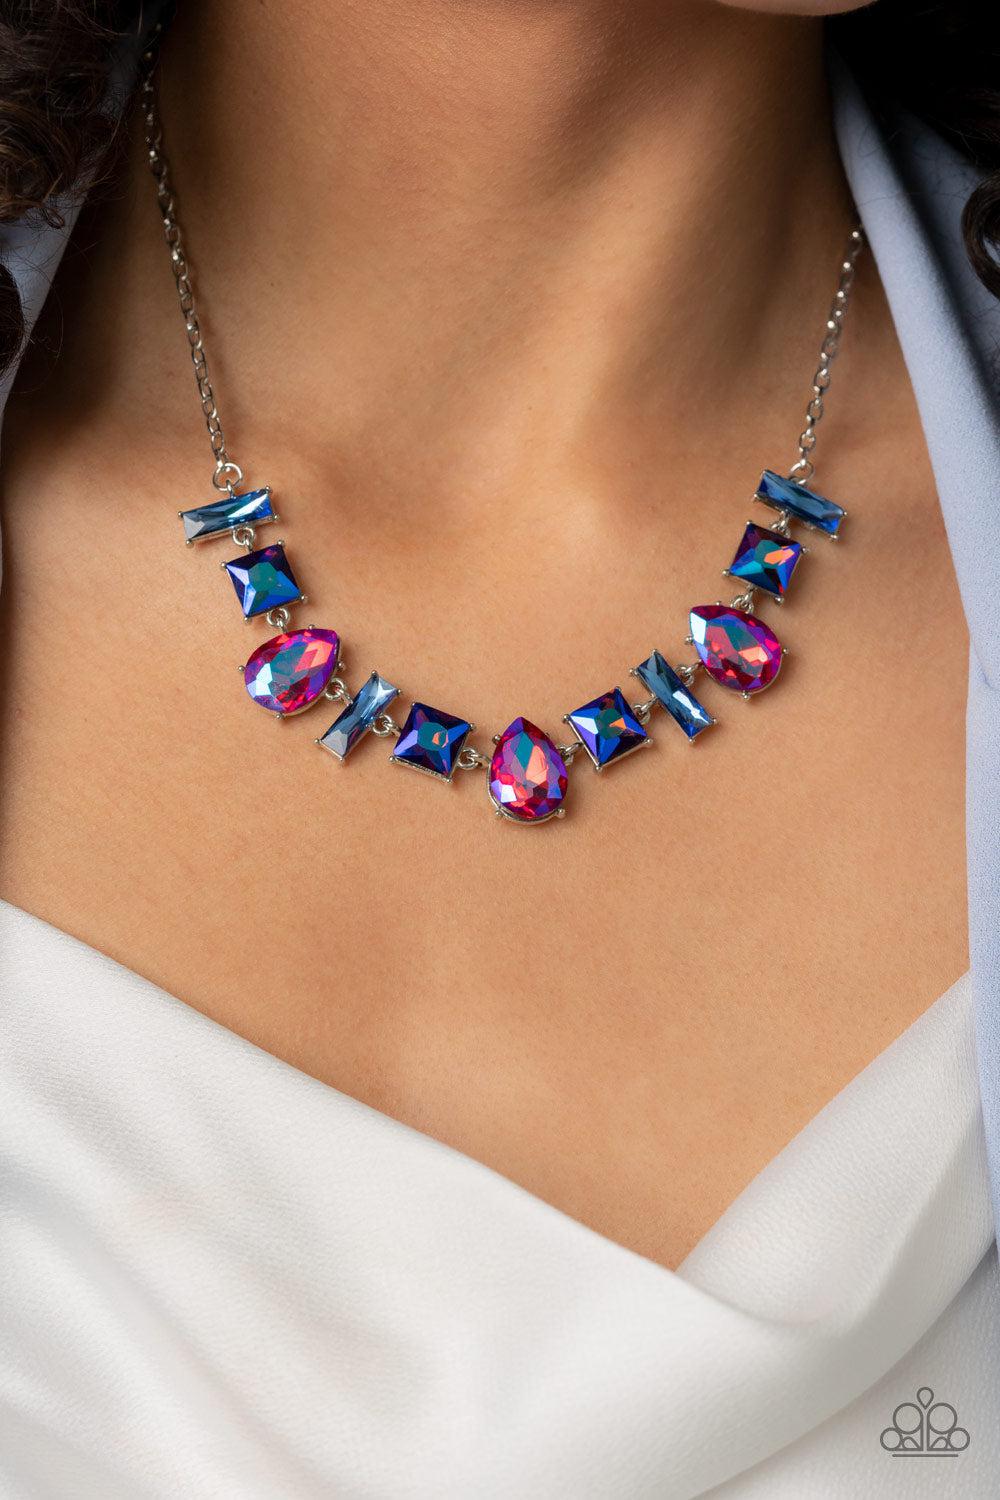 Interstellar Ice - Pink UV Shimmer Necklace - Paparazzi Accessories - GlaMarous Titi Jewels